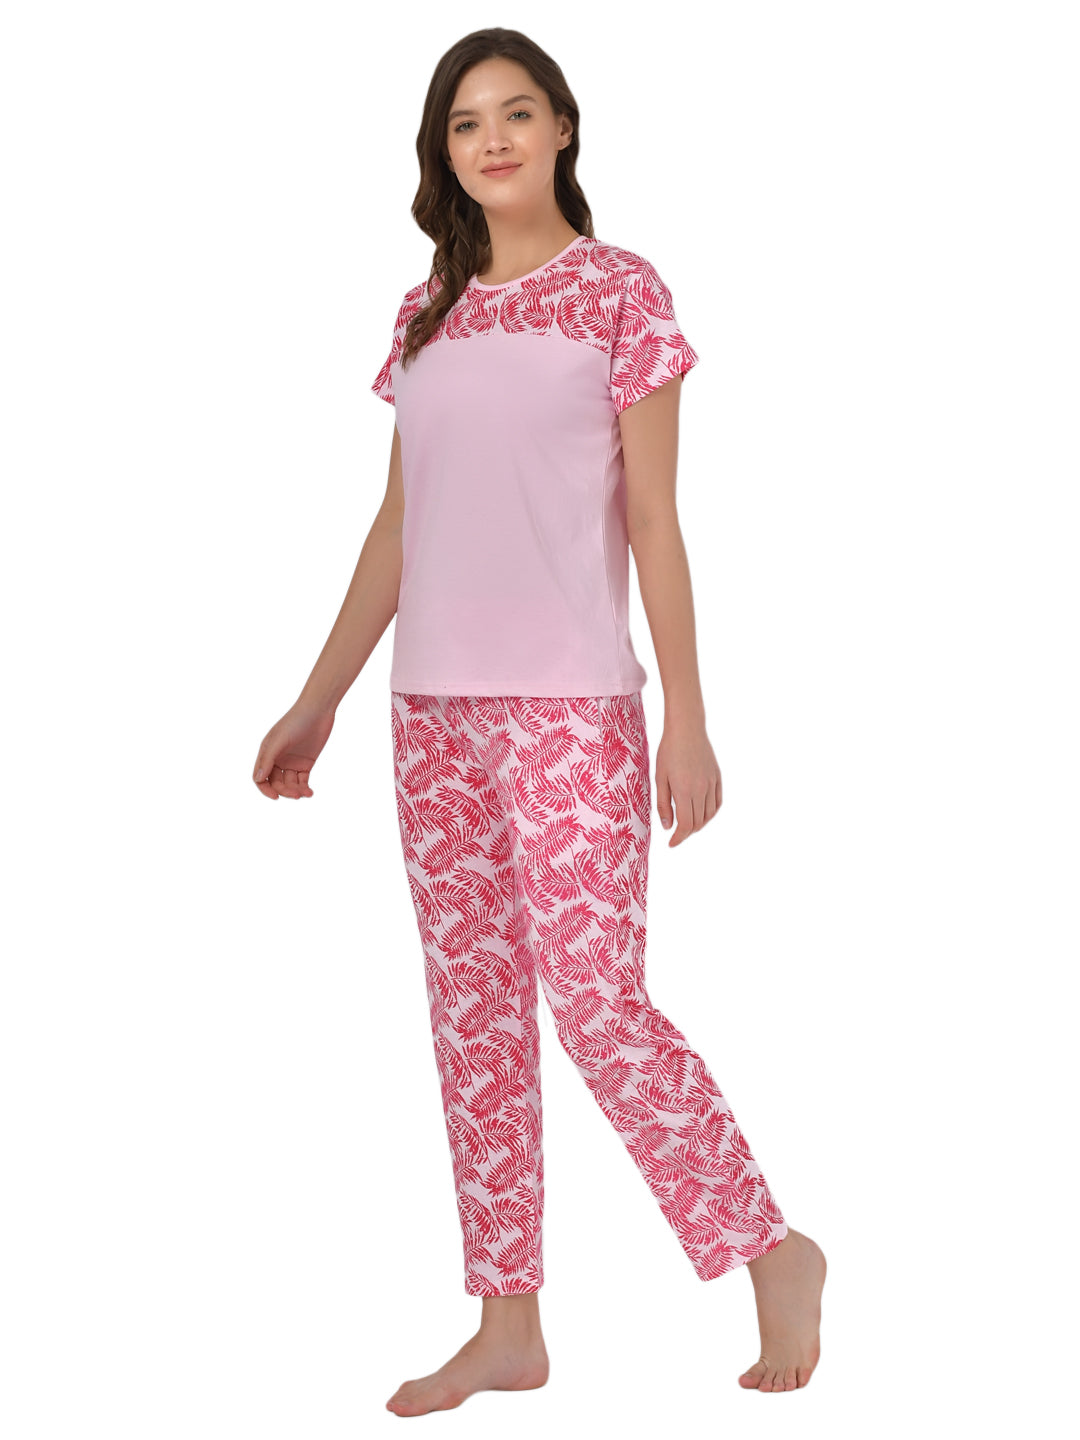 Klamotten Women's Baby Pink Allover Printed Top Pyjama Set N32Rb